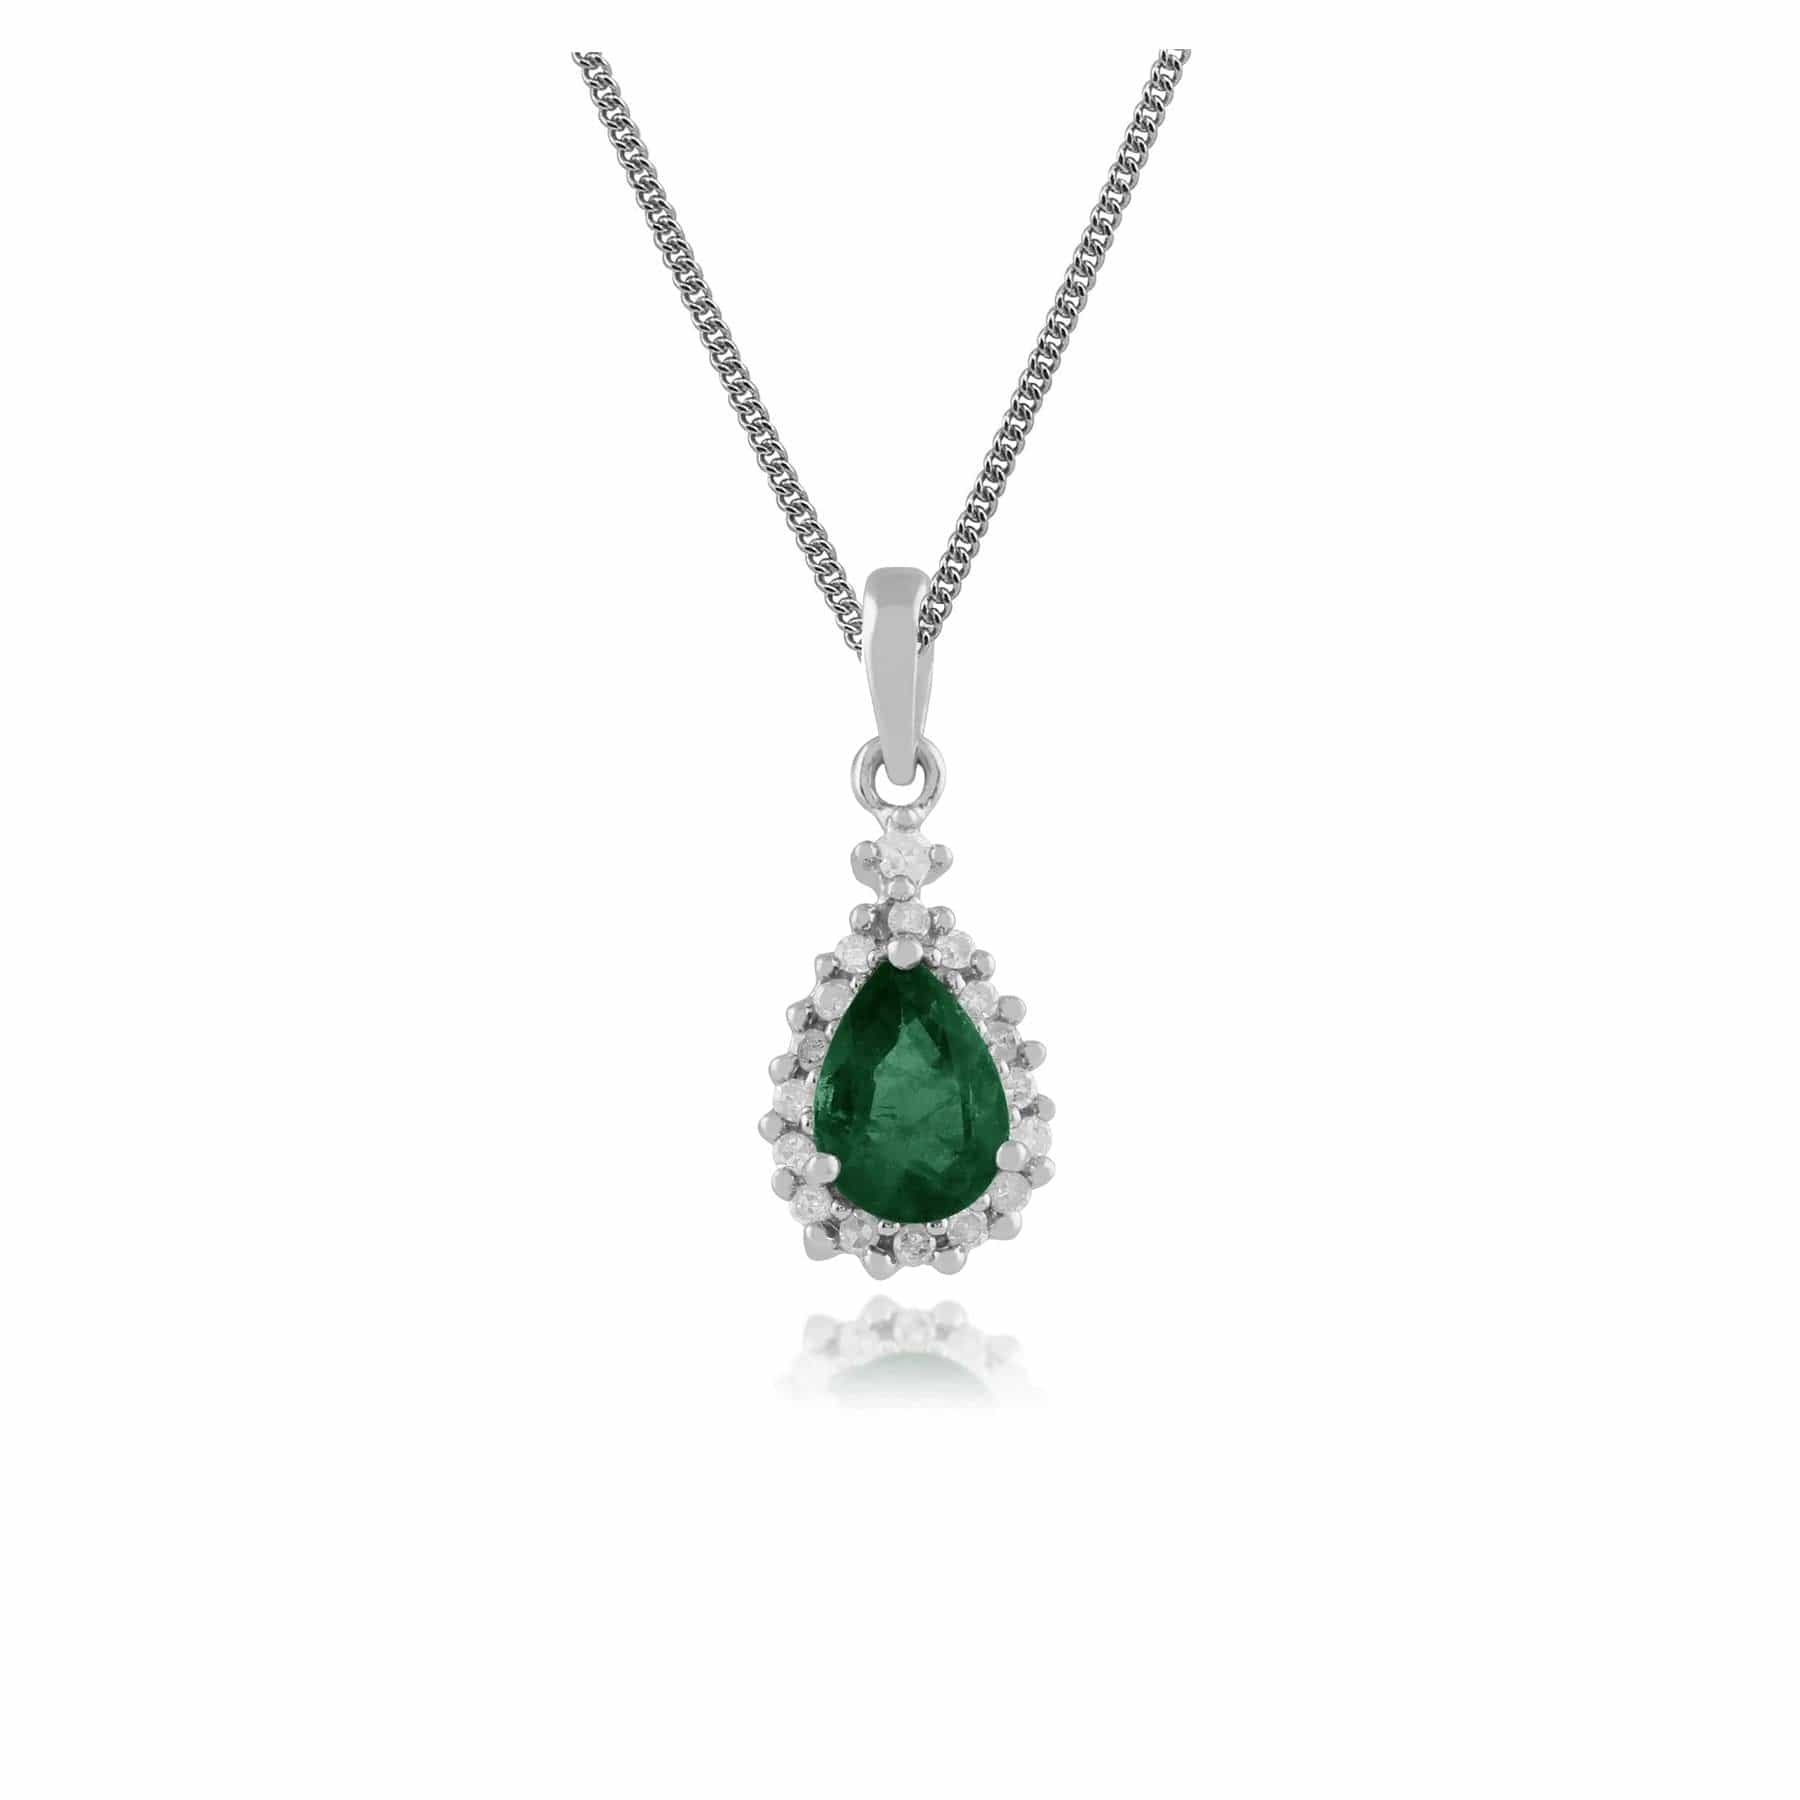 Classic Pear Emerald & Diamond Halo Stud Earrings & Pendant Set in 9ct White Gold - Gemondo